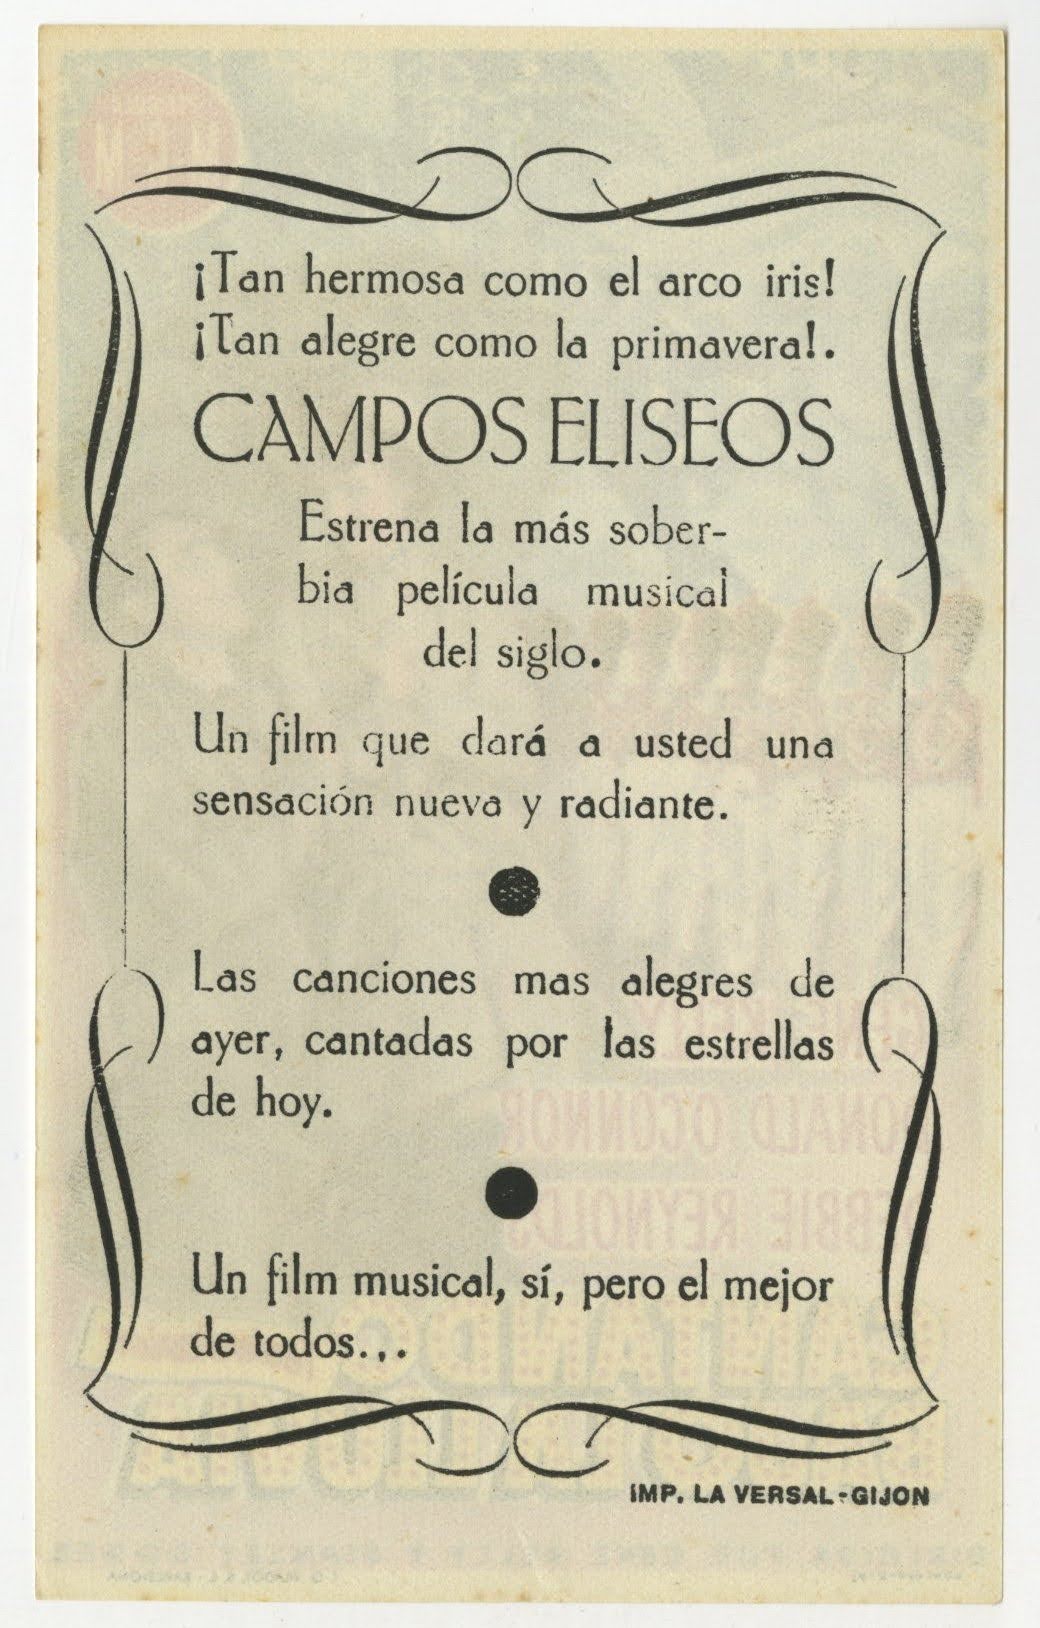 Singin' In The Rain Spanish Herald (R 1953) - posterpalace.com